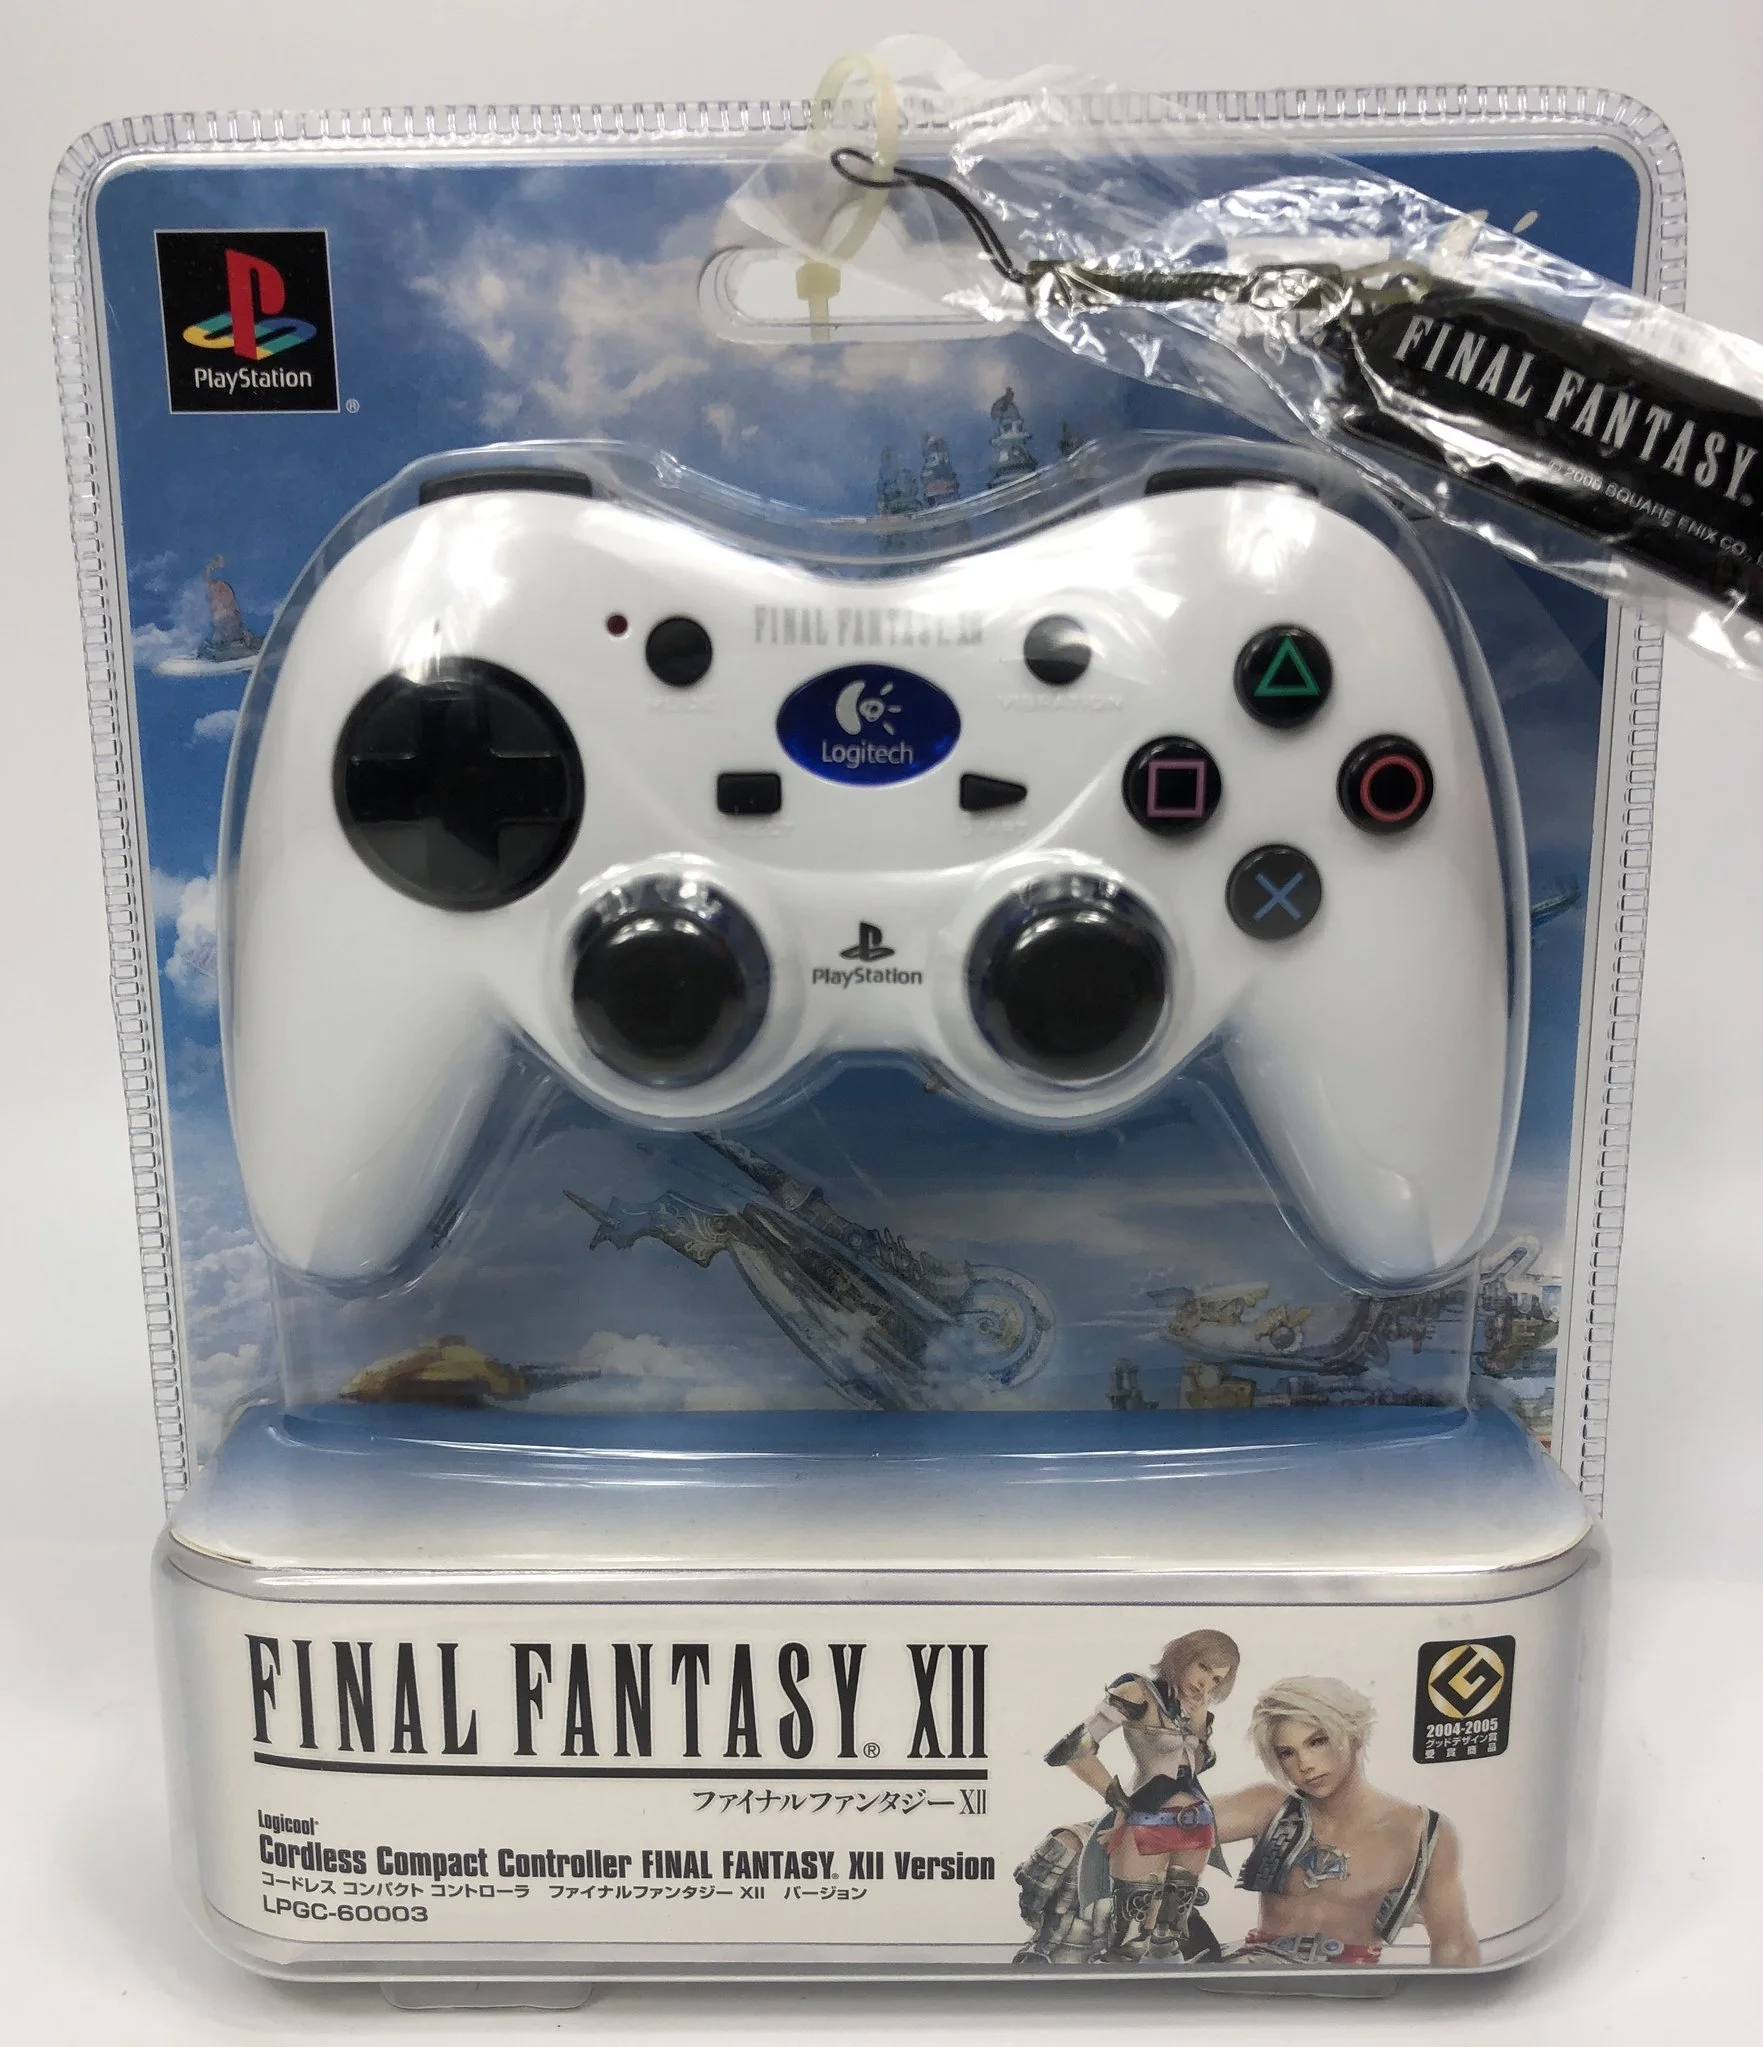  Logitech PlayStation 2 Final Fantasy XII Controller